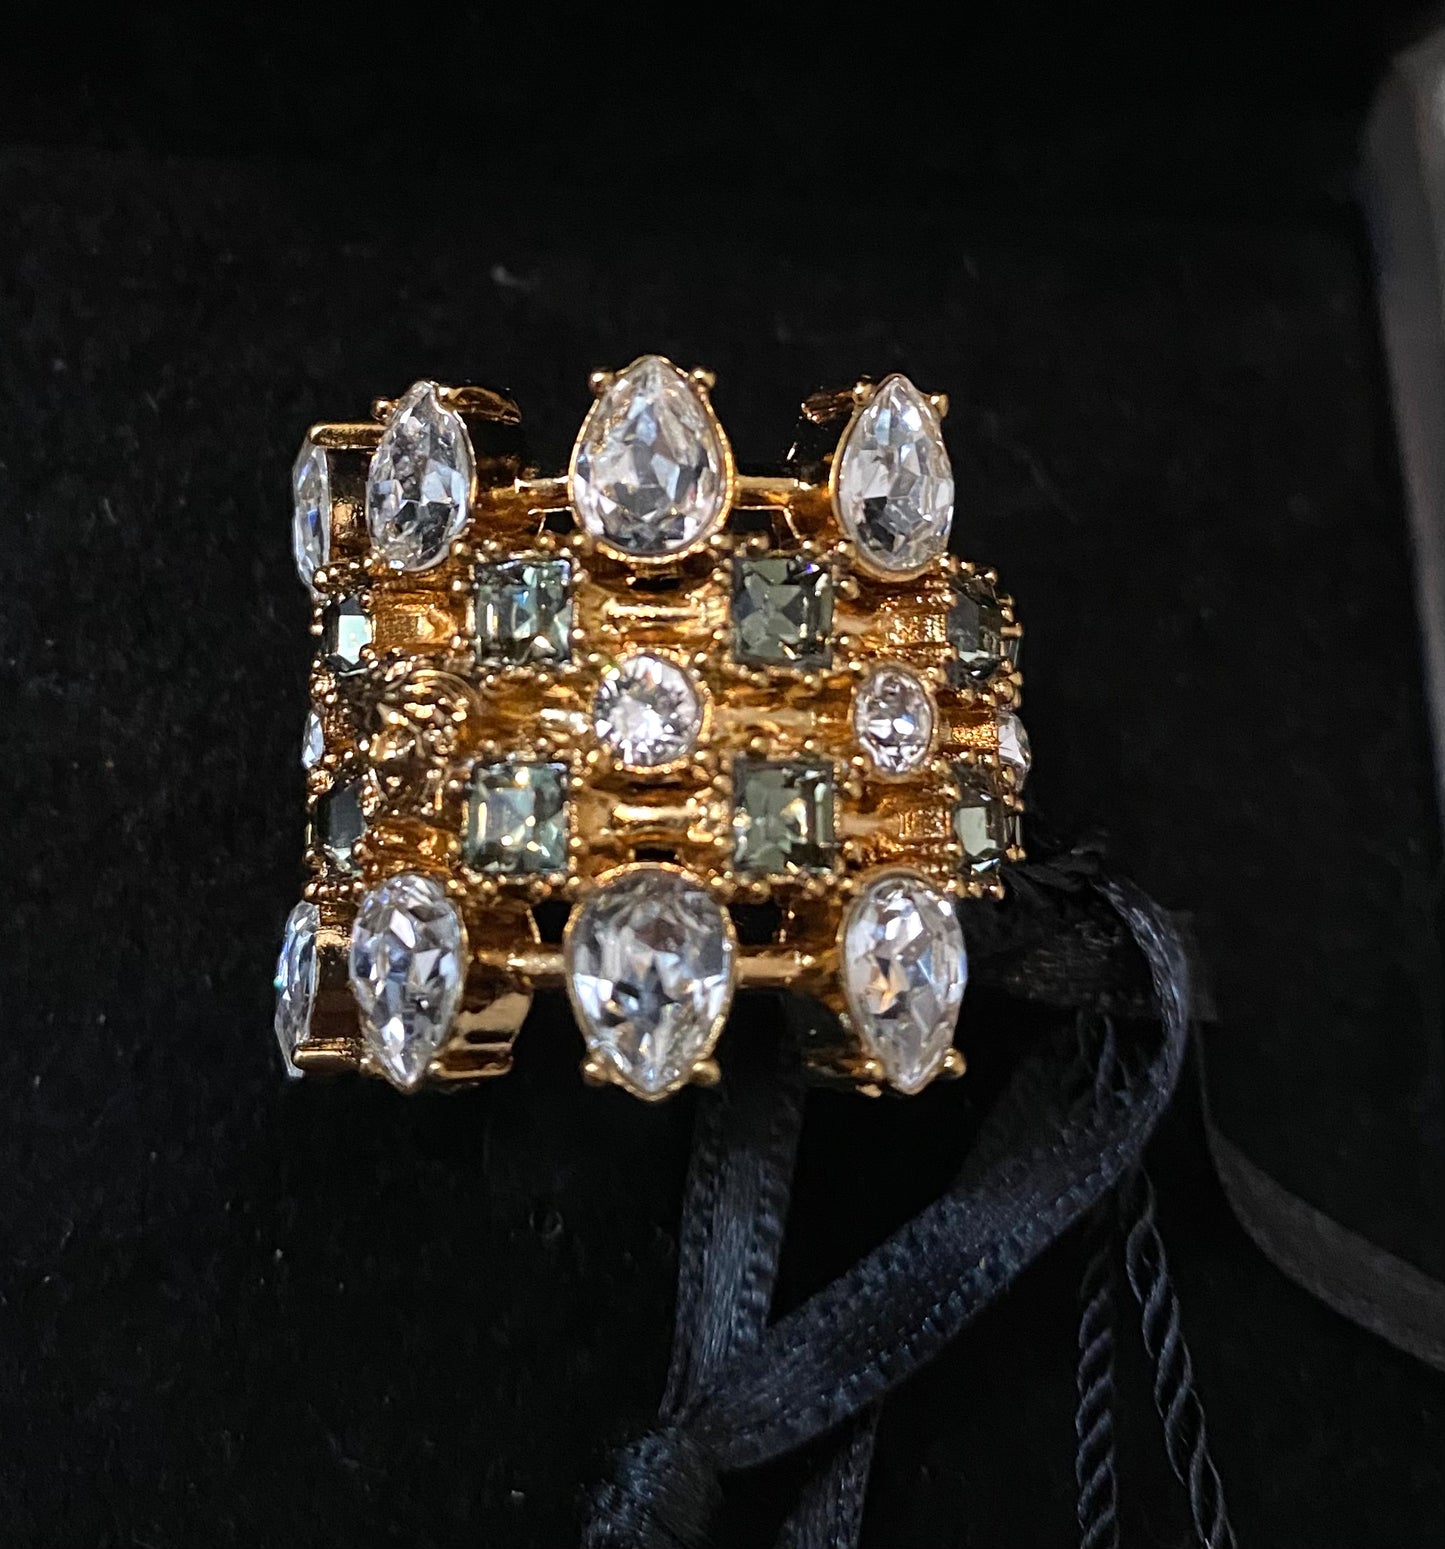 Versace chunky golden metal medusa & white/grey crystals ring, BNWT